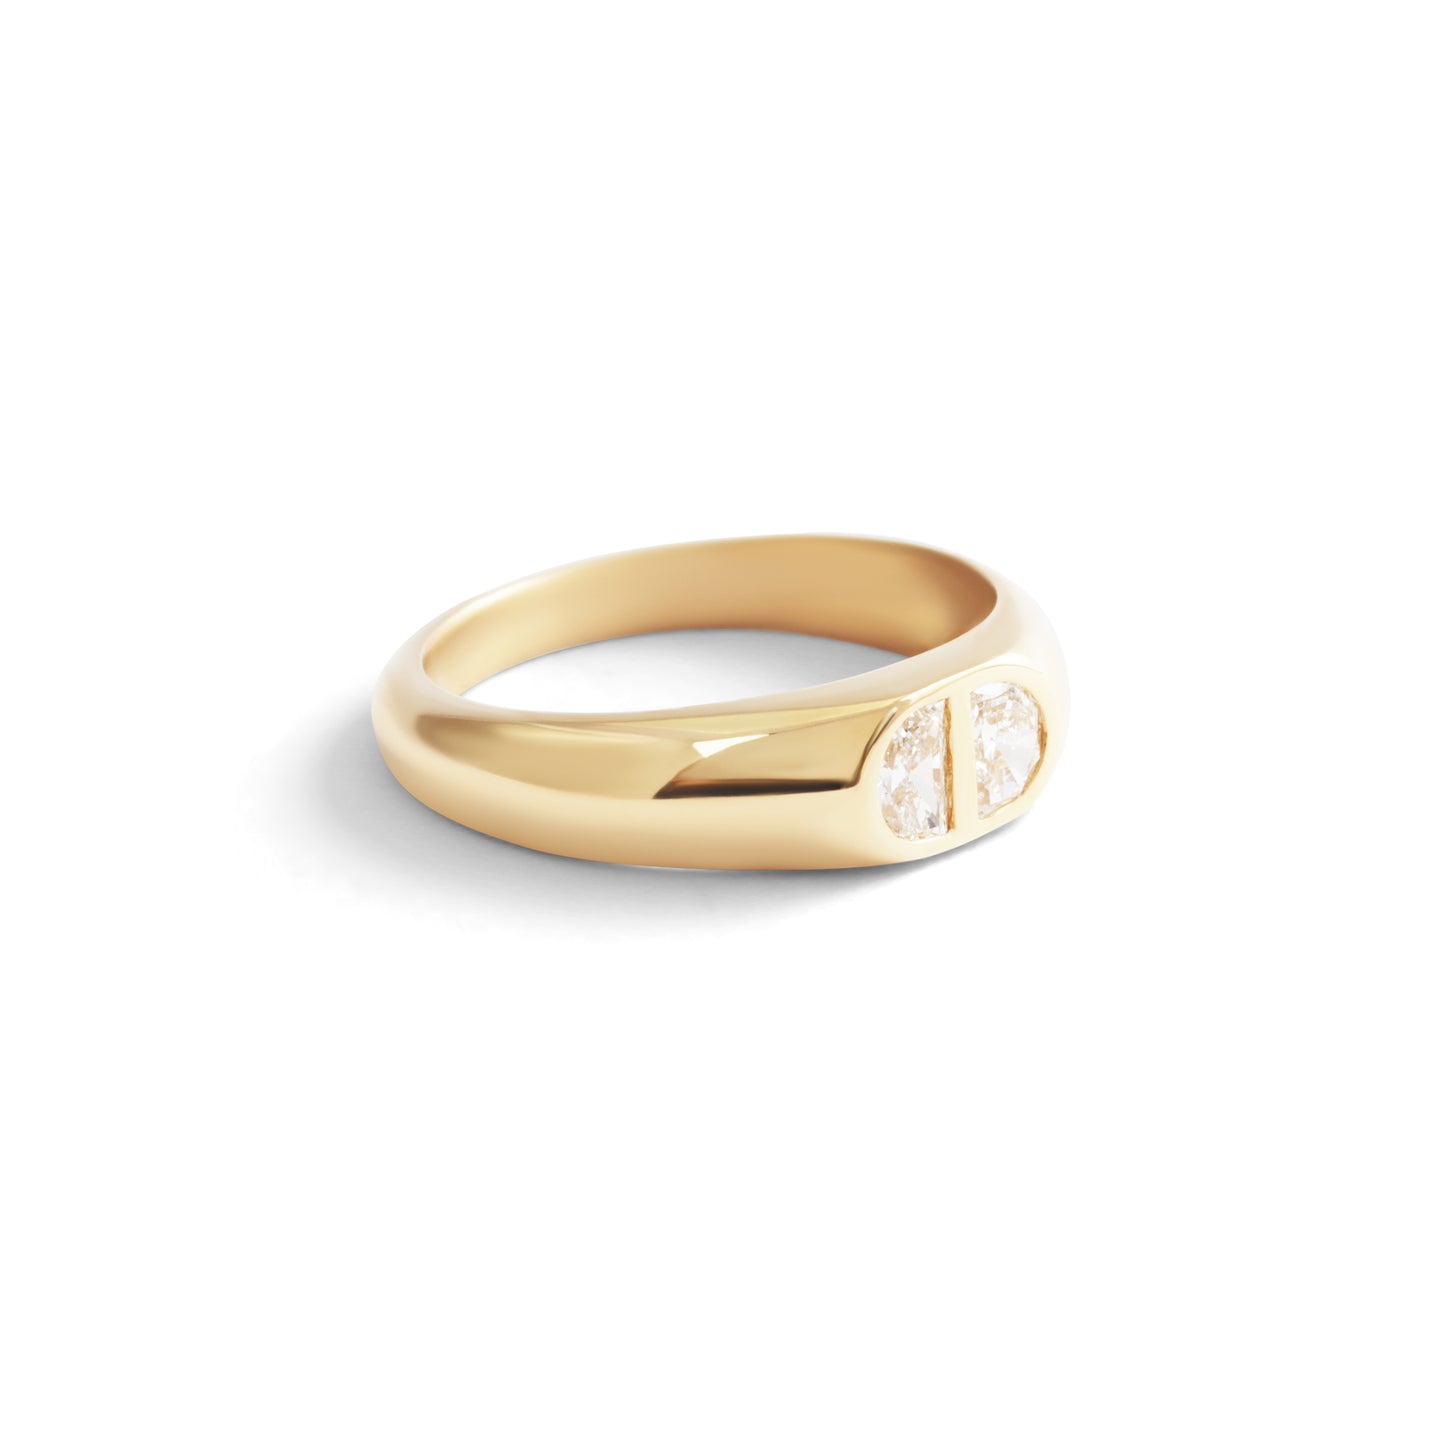 Diptych Signet Ring / Lab Half Moon Diamond 0.39ct - Goldpoint Studio - Greenpoint, Brooklyn - Fine Jewelry